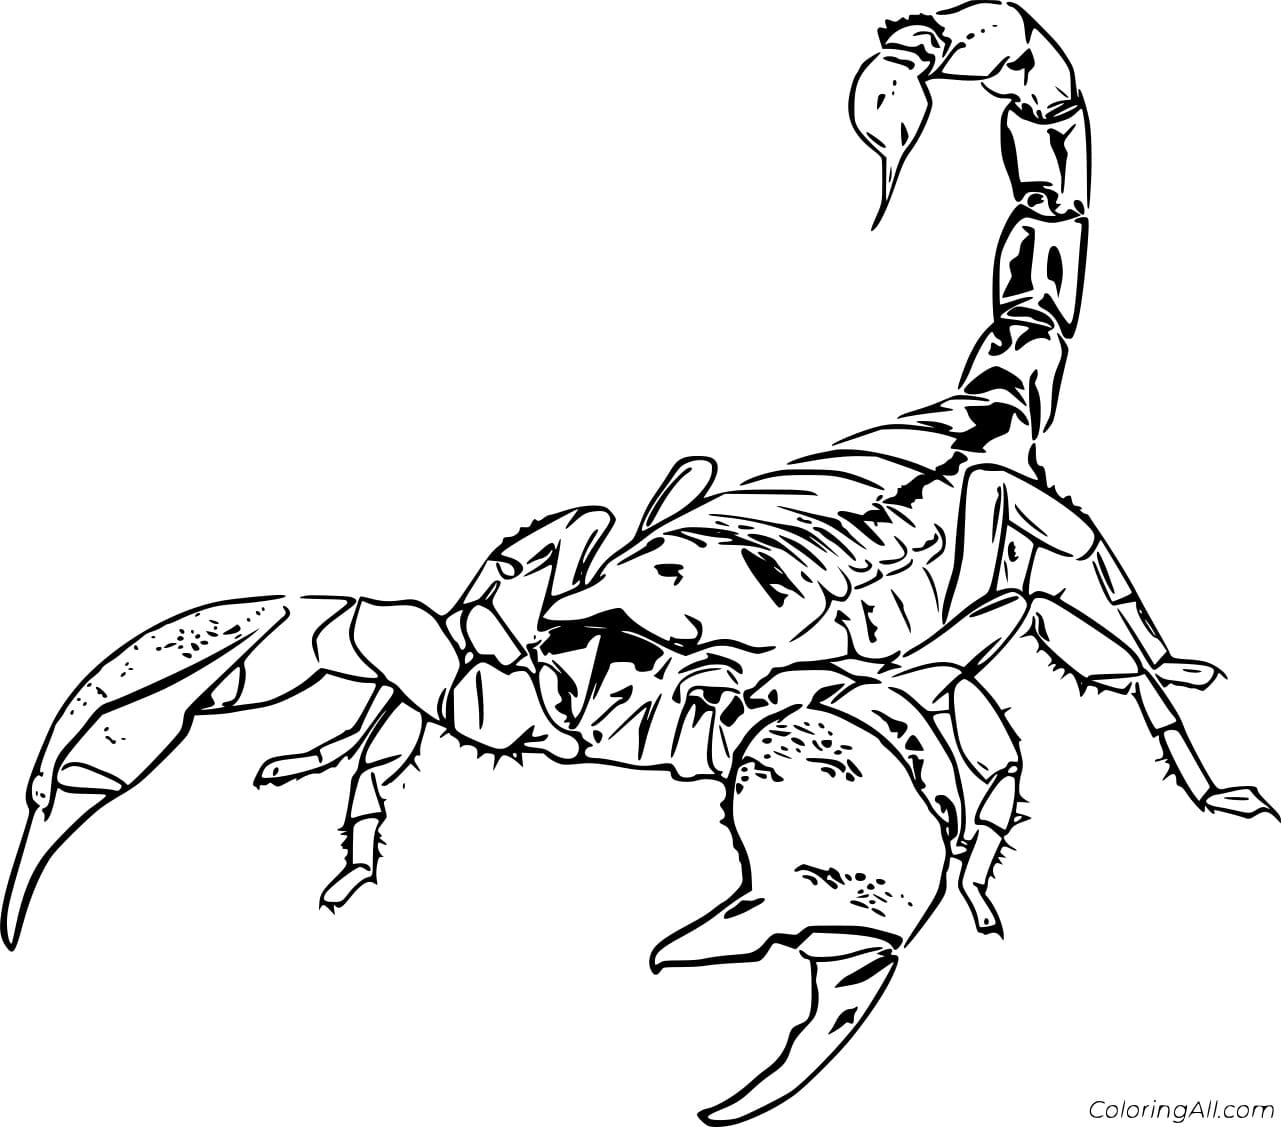 Emperor Scorpion Image